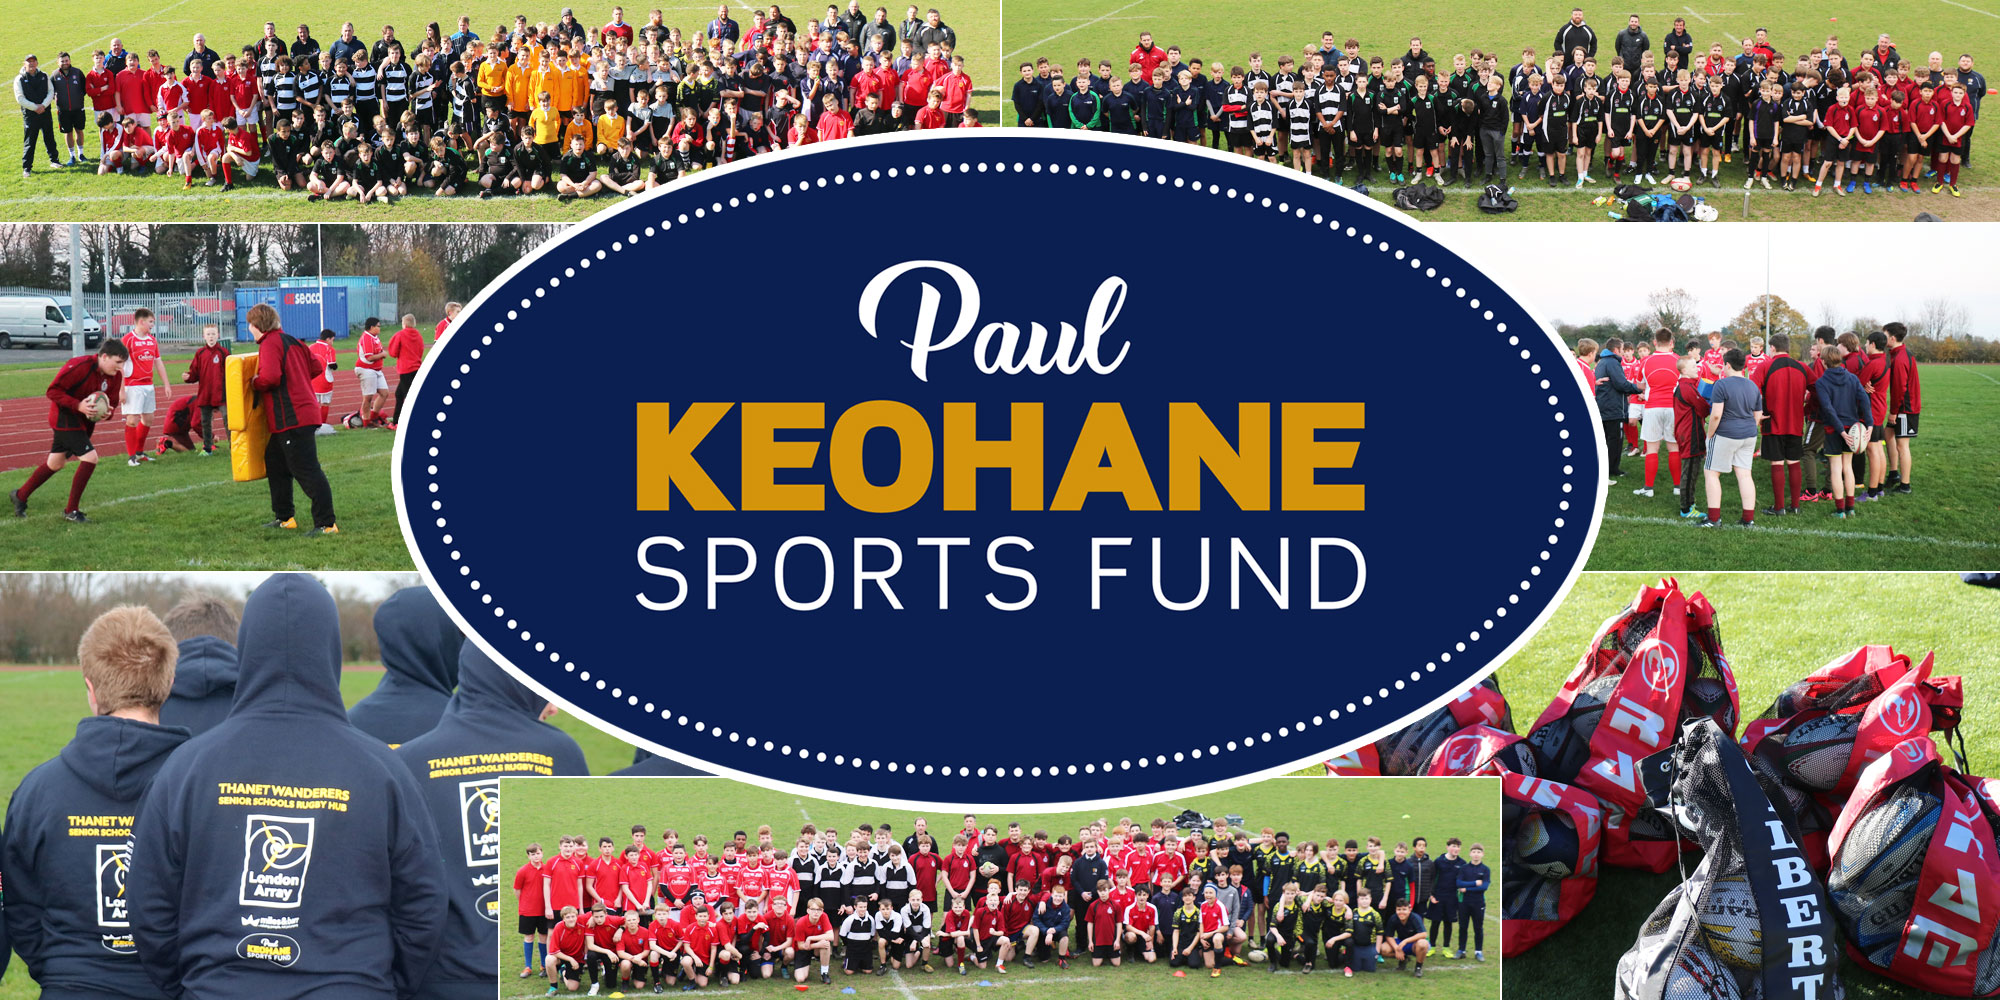 Paul Keohane Sports Fund Website